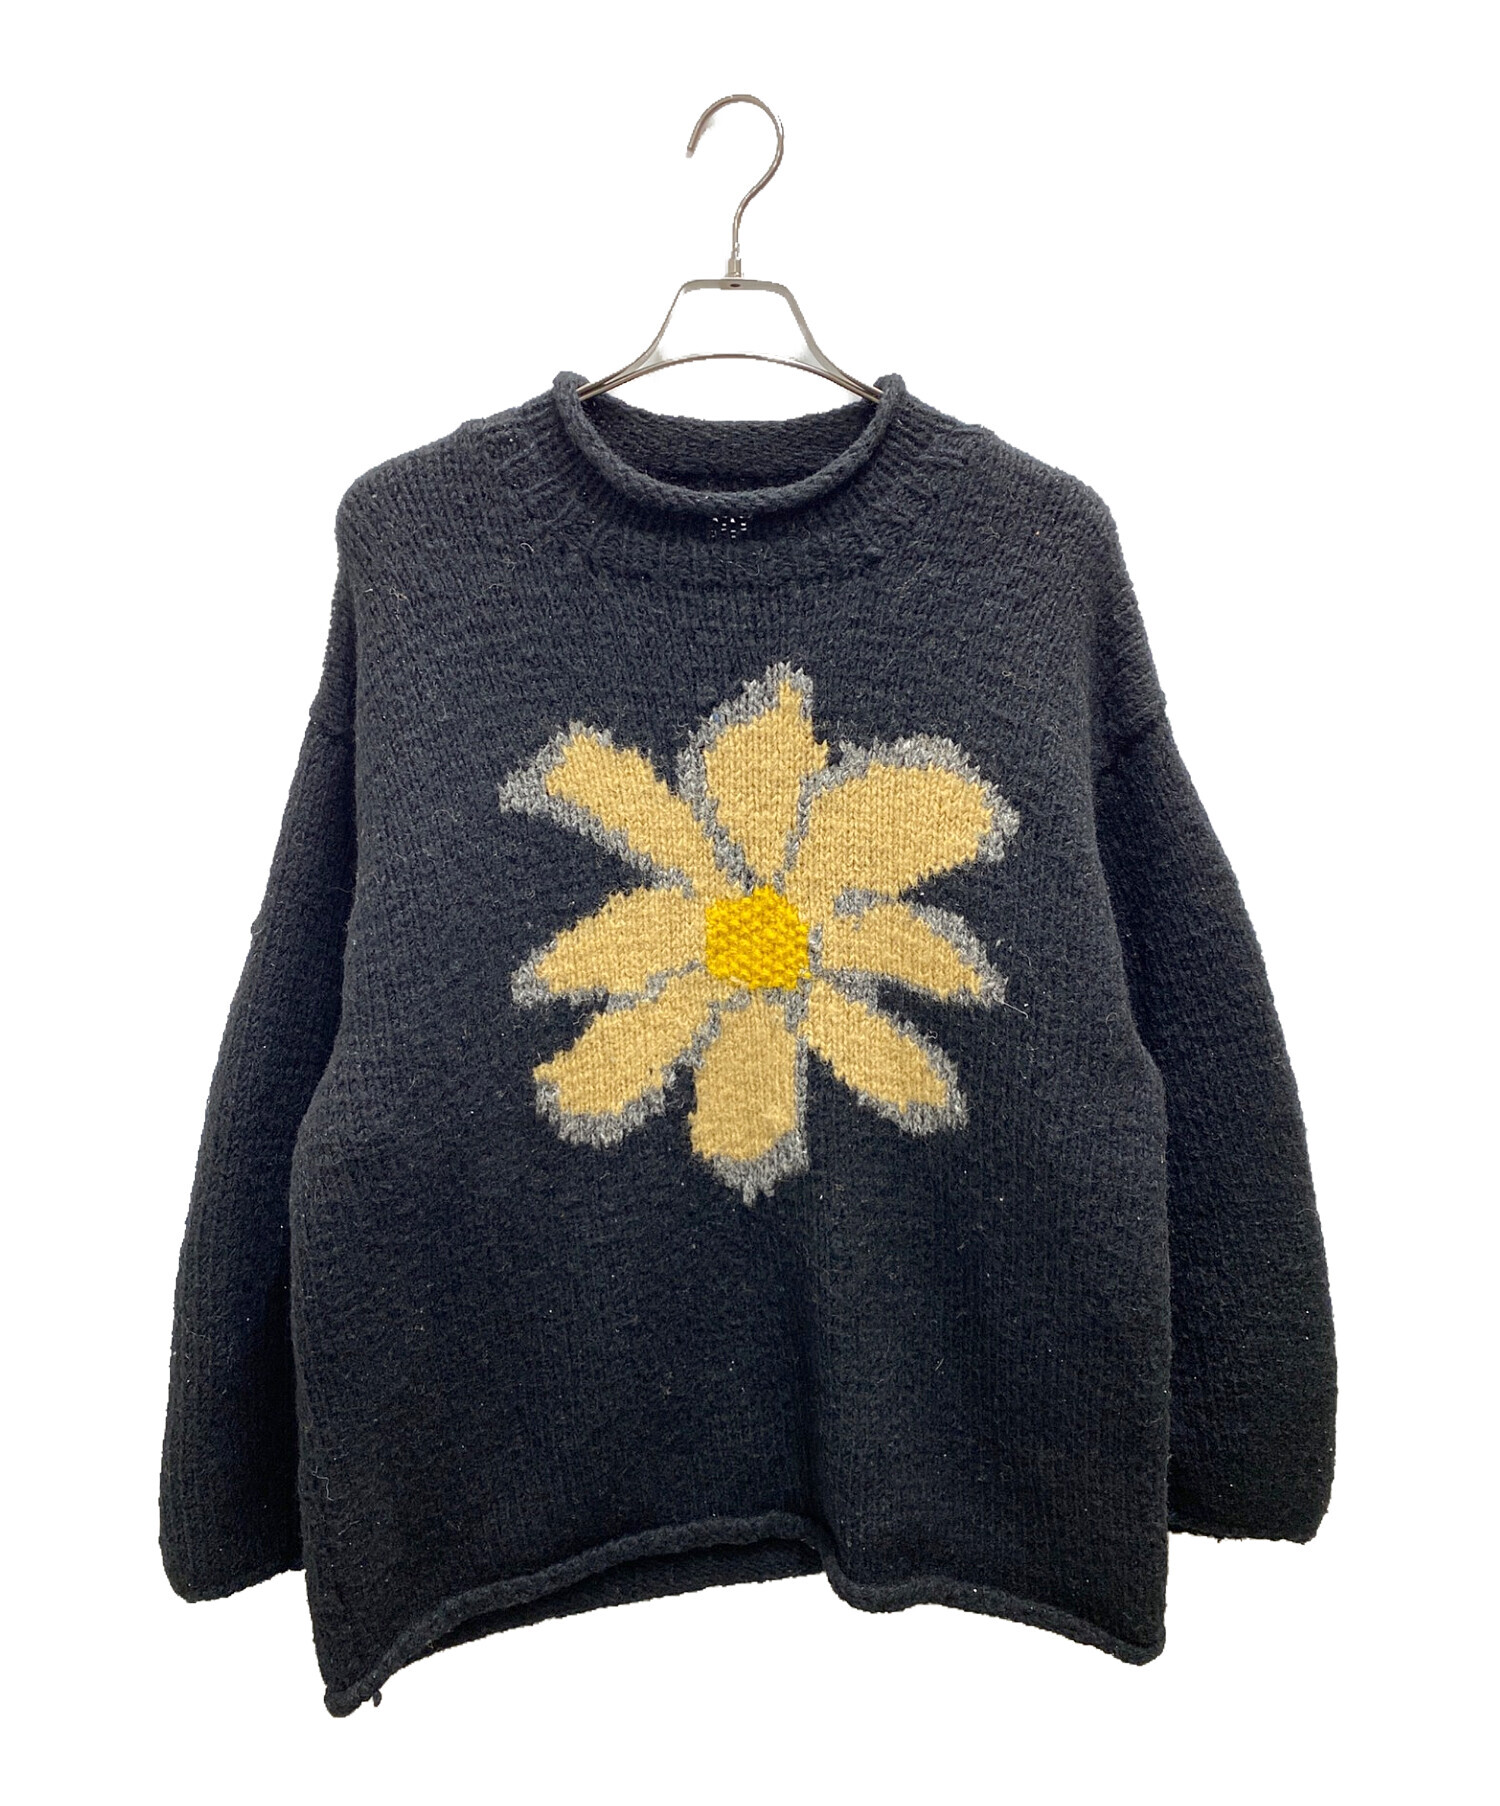 Niche. (ニッチ) MacMahon Knitting Mills by niche. (マクマホンニッティングミルズバイニッチ) Roll  Neck Knit Flower ブラック サイズ:M